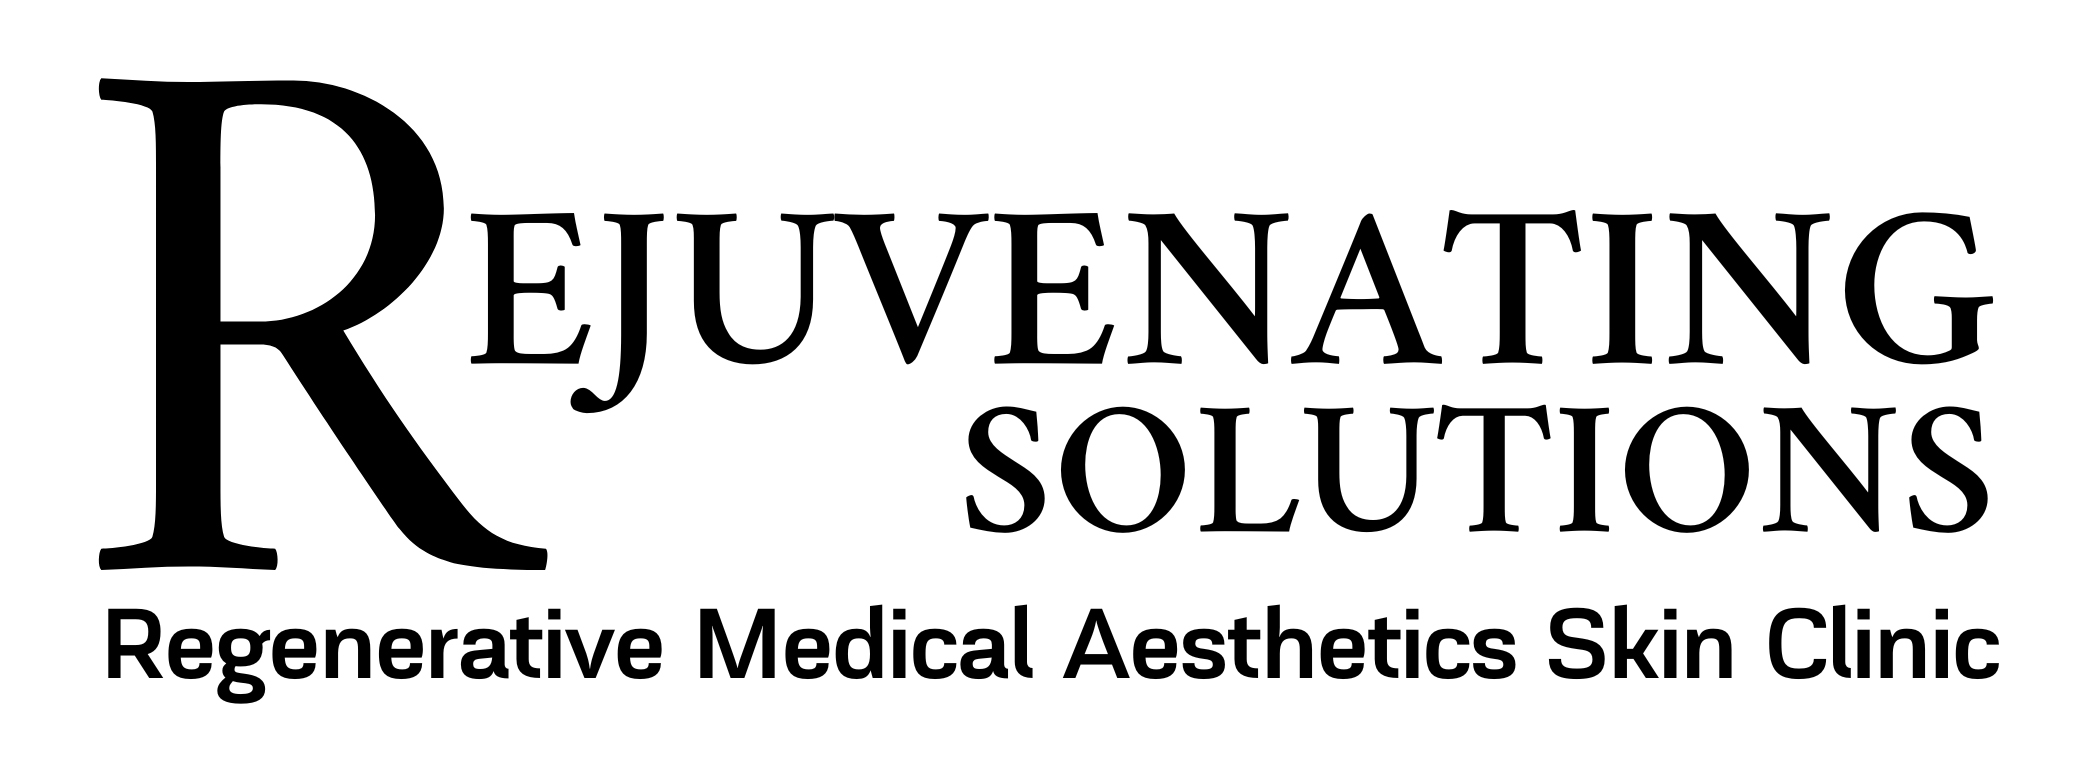 Rejuvenating Solutions Logo